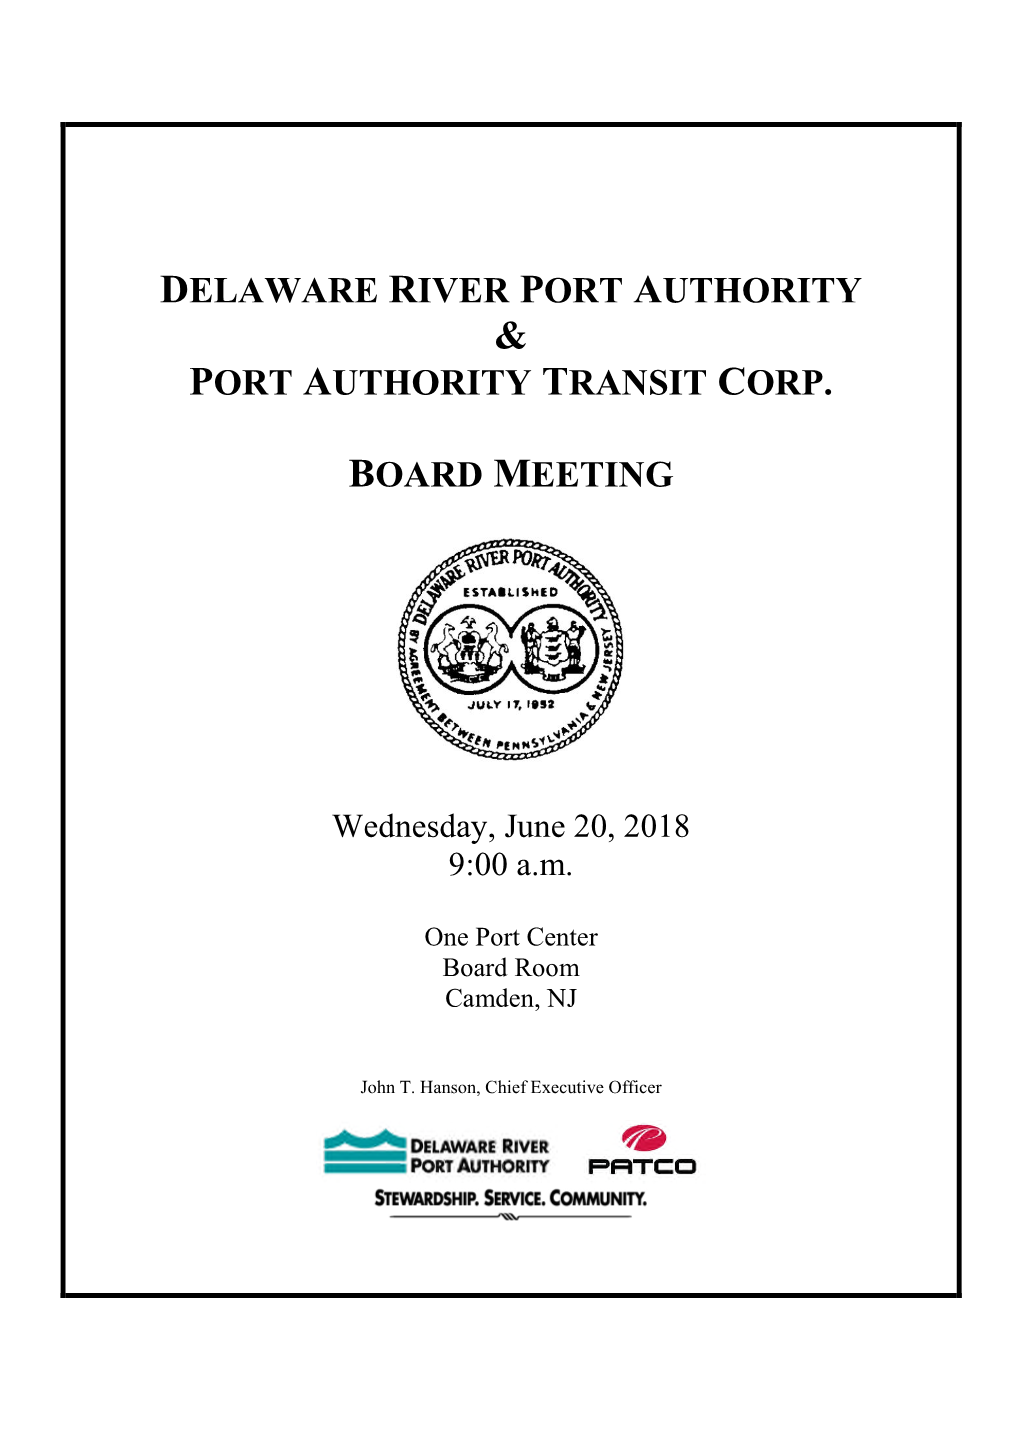 Delaware River Port Authority Port Authority